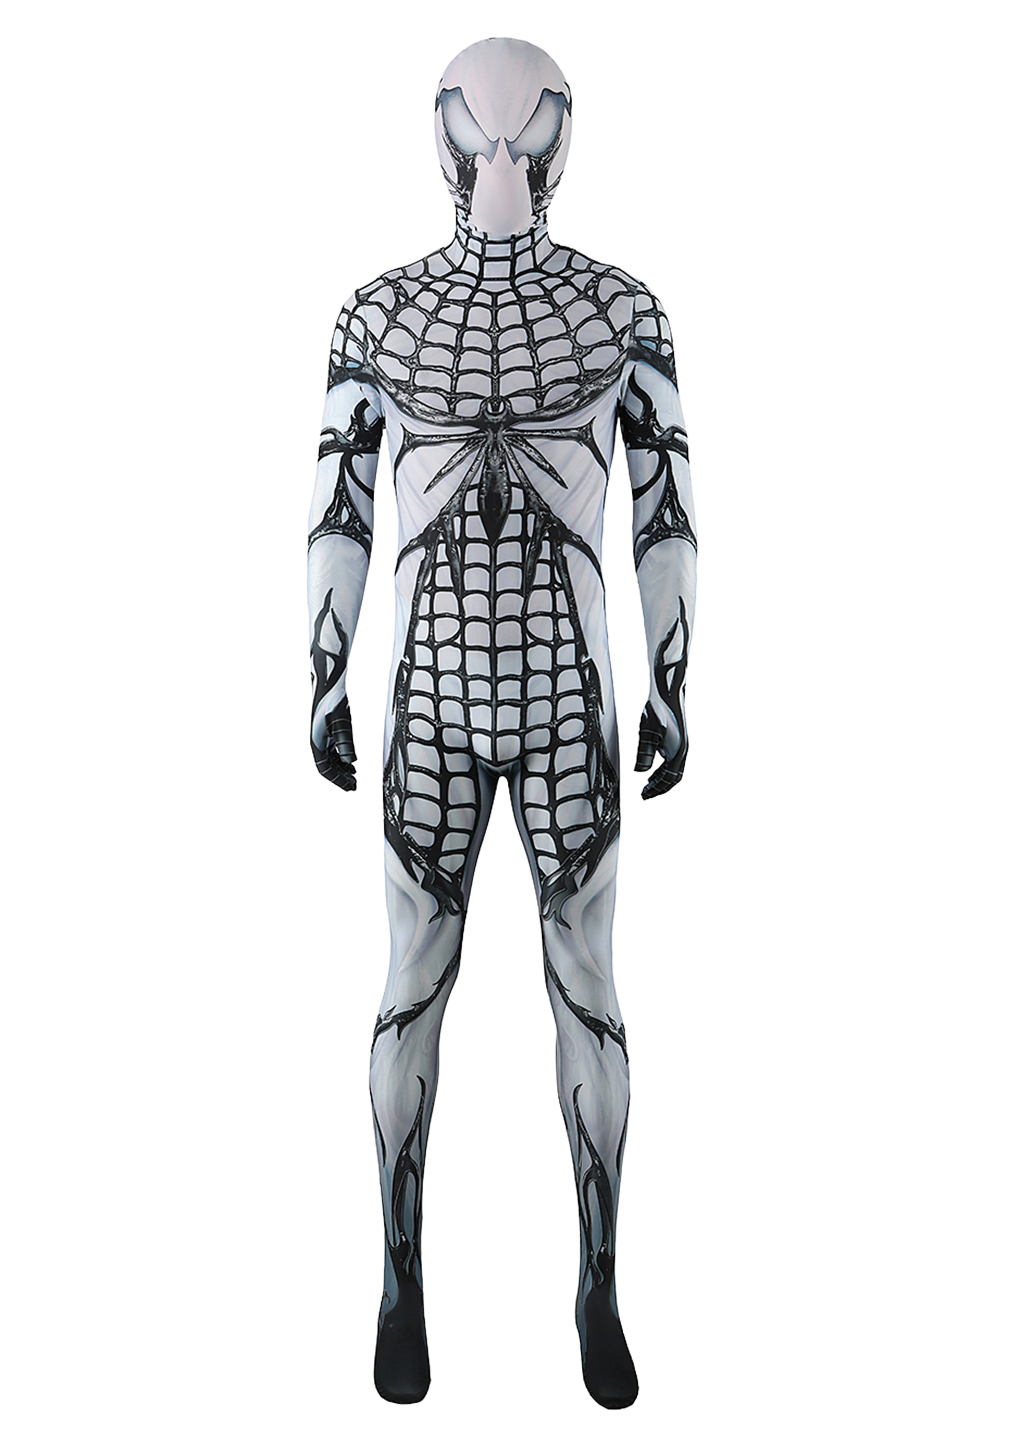 Venom Costume Marvel's Spider-man 2 Bodysuit Cosplay for Adult Kids Black White Ver